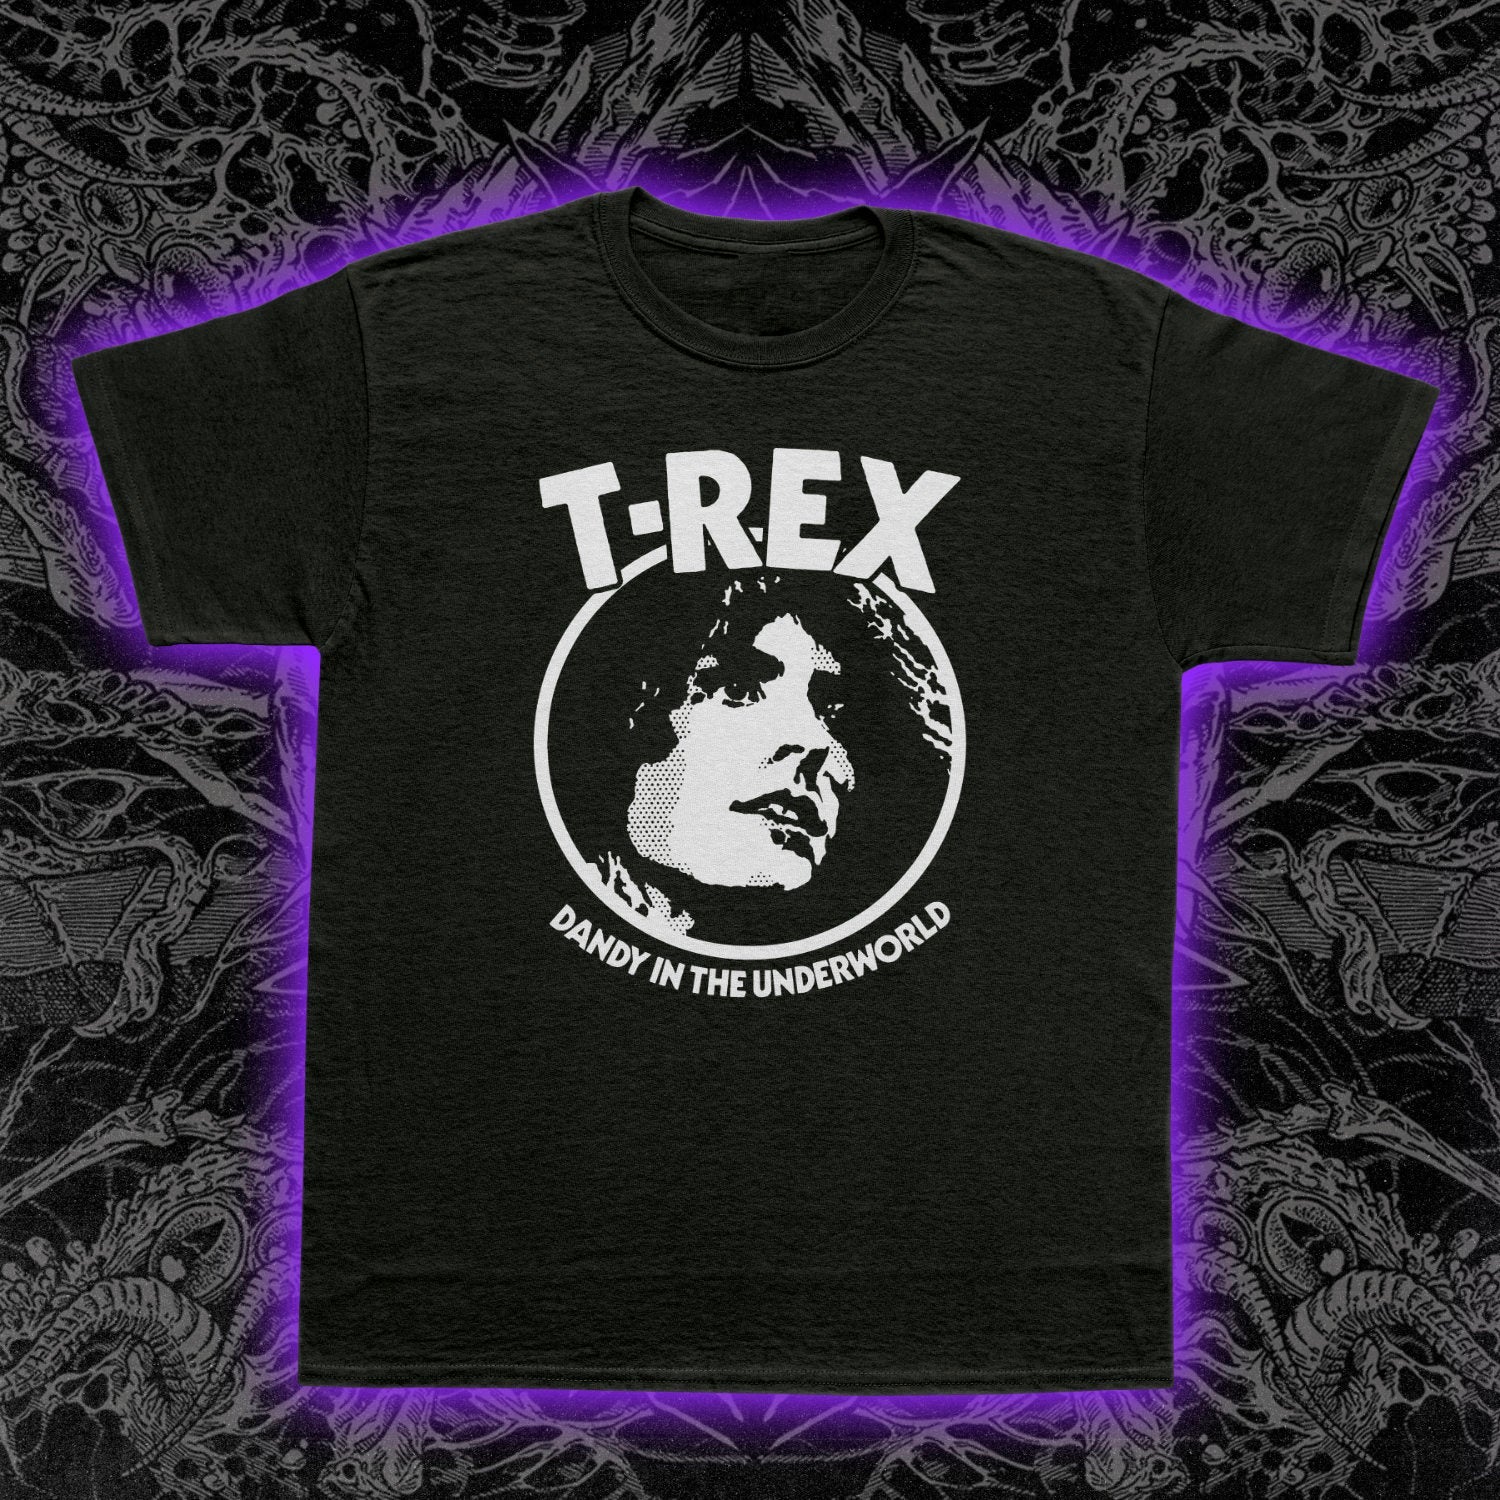 T-Rex Dandy In The Underworld Premium Tee